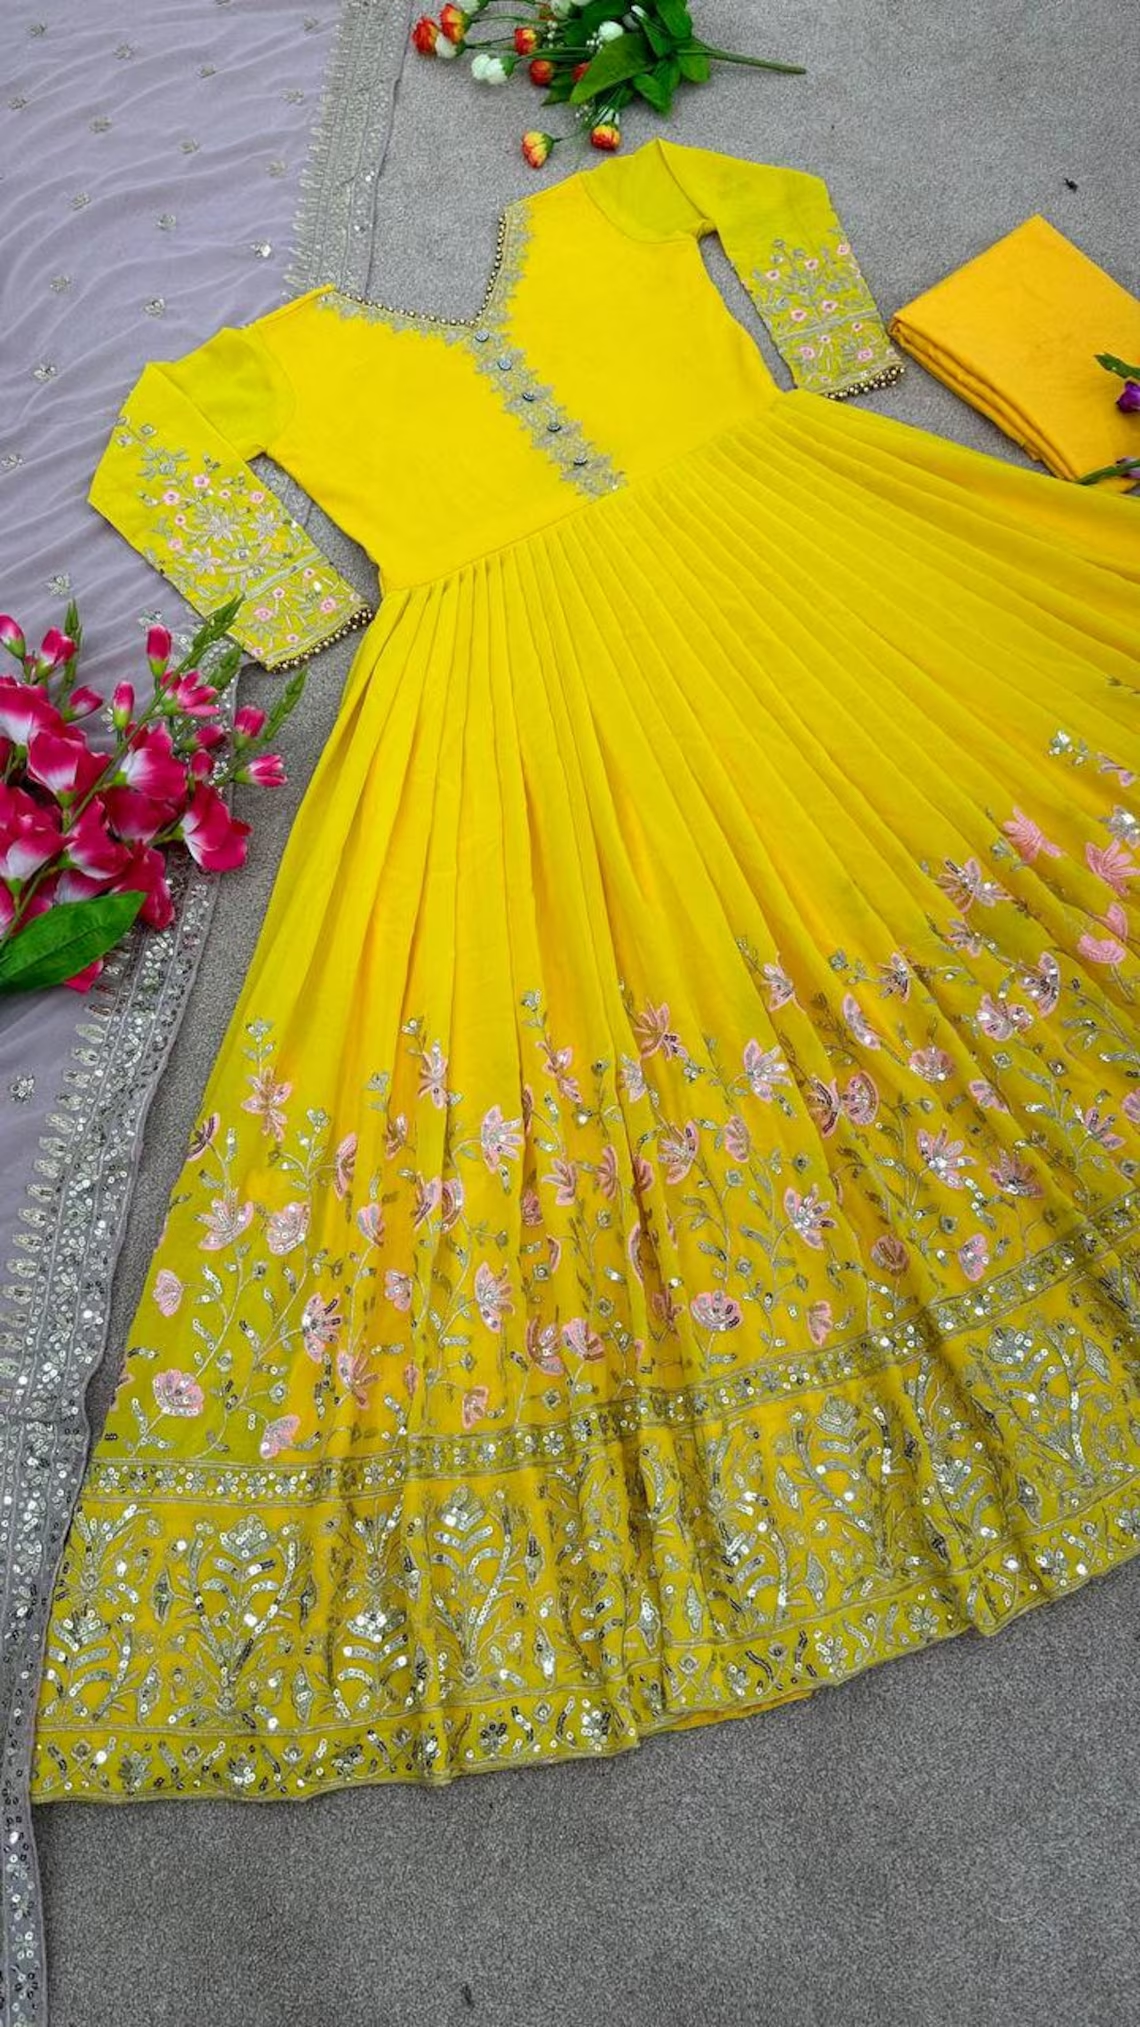 Buy Flower Girl Dress, Baby Yellow Dress, Tutu Dress, Princess Dress, Party  Dress, First Birthday Dress Online in India - Etsy